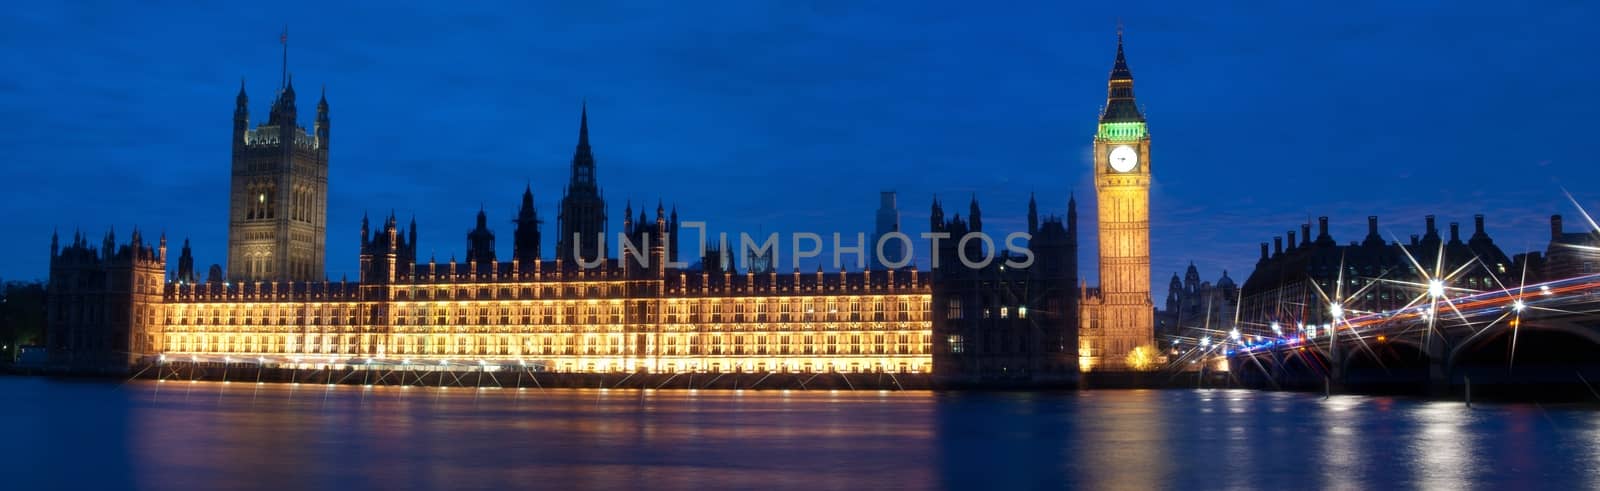 Big ben and parliament, London, panorama by mitakag